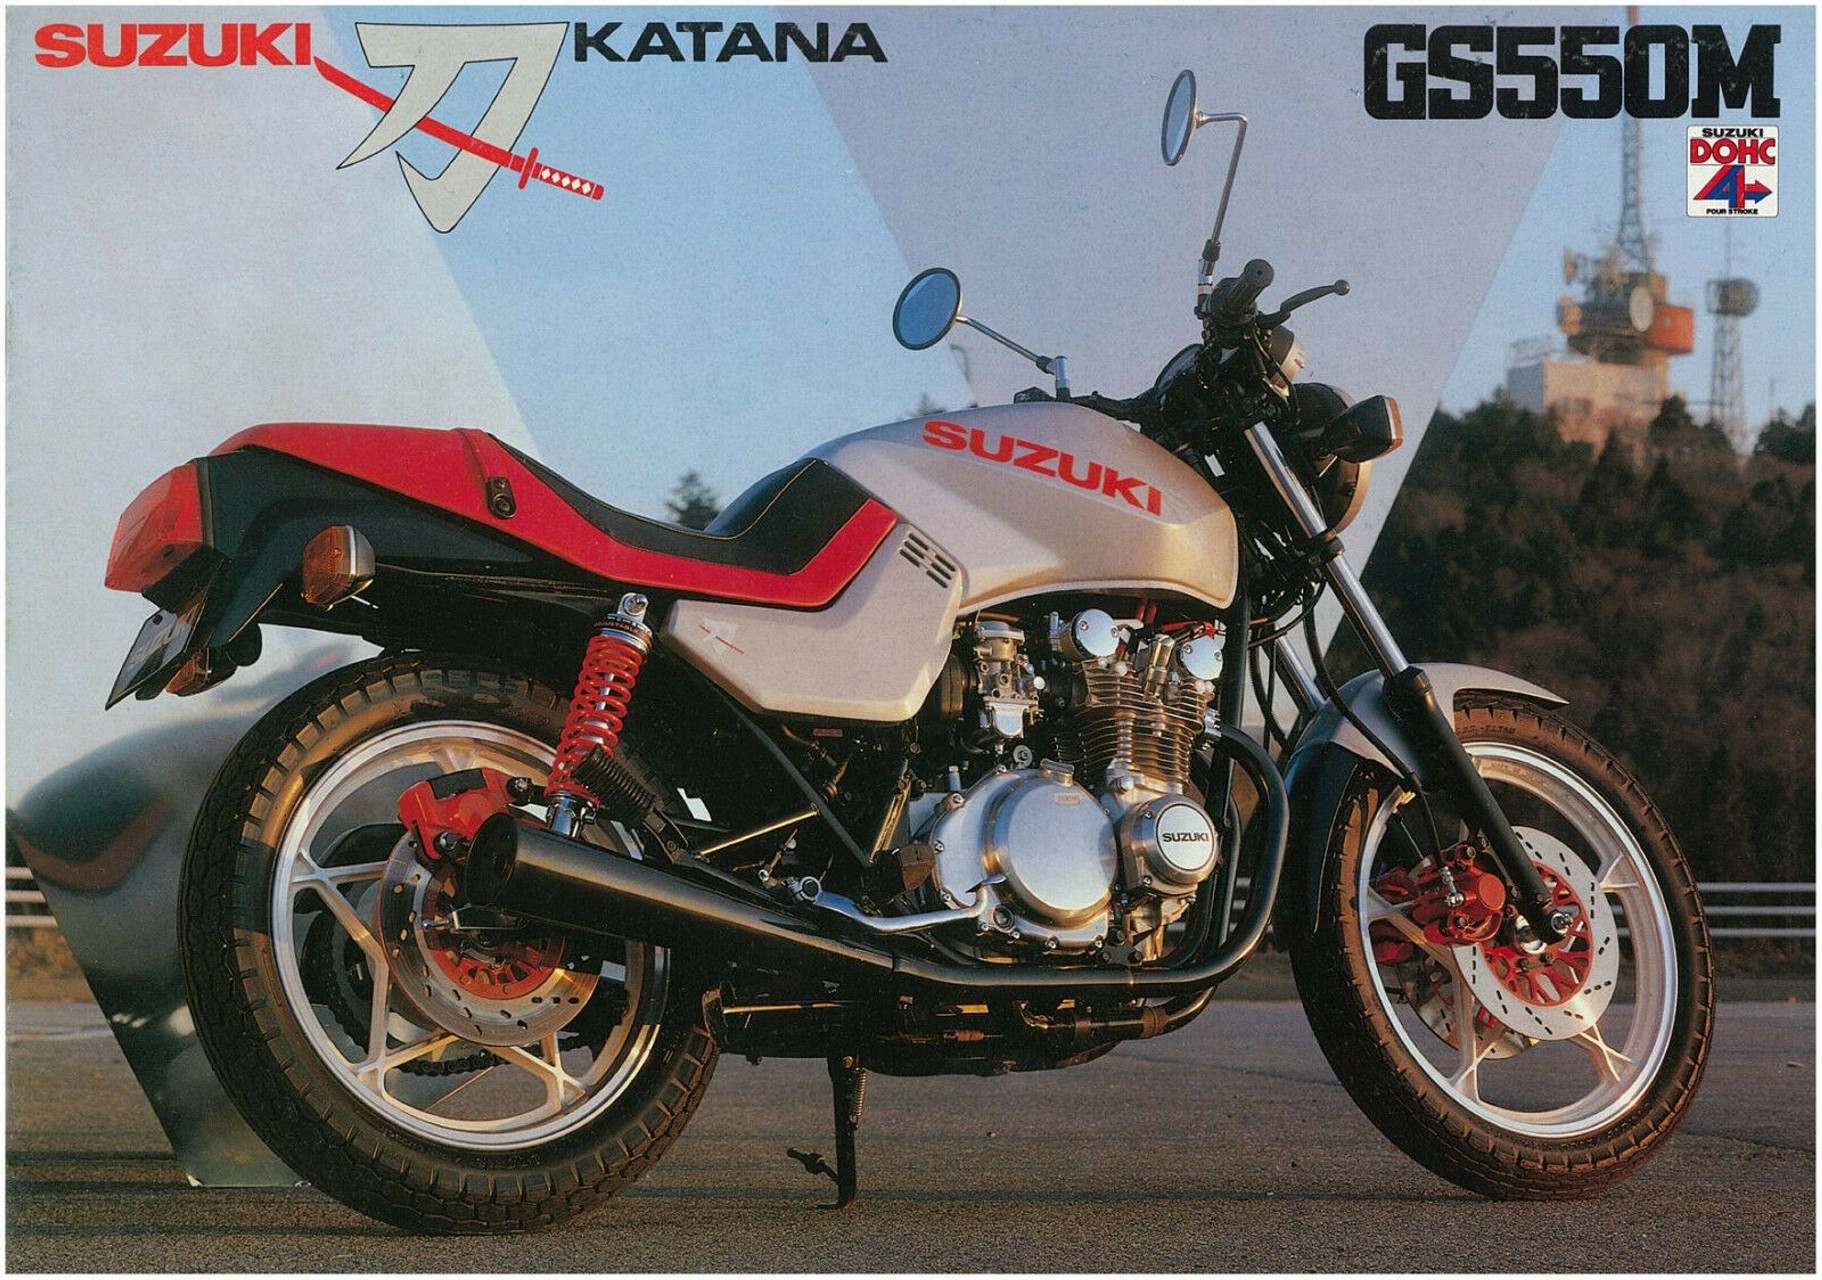 Suzuki GS 550 M Katana (9)